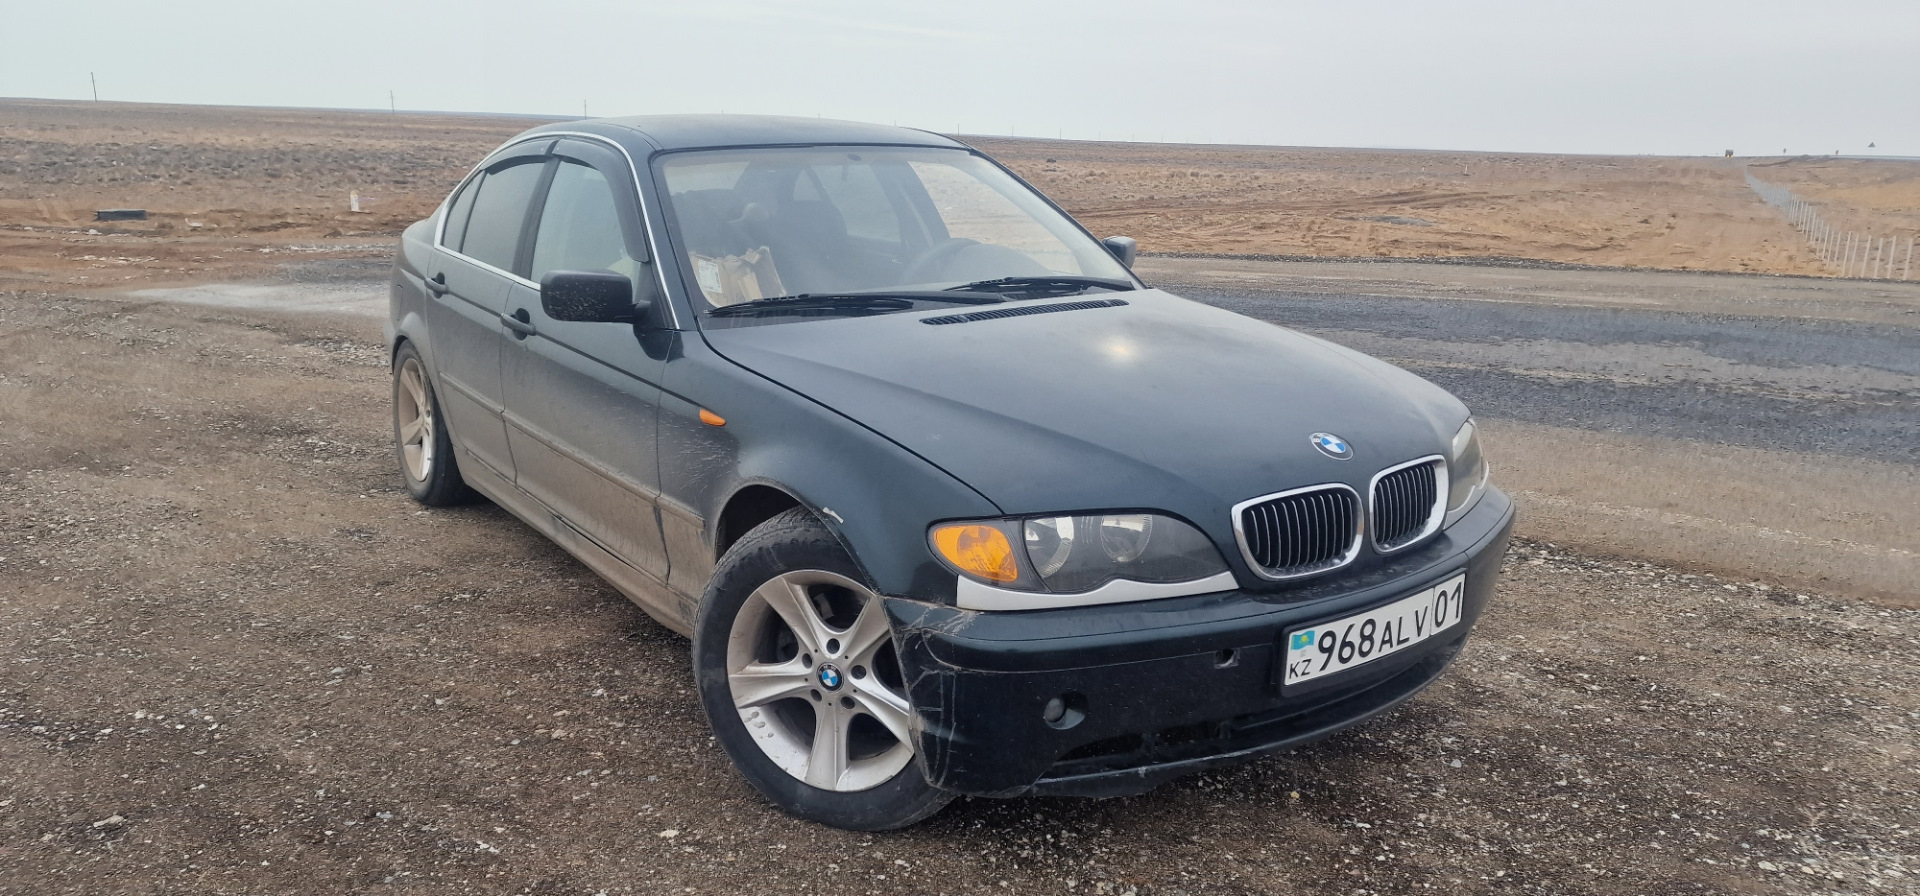 Да будет чудо♧ — BMW 3 series (E46), 2,5 л, 2002 года | обкатка | DRIVE2